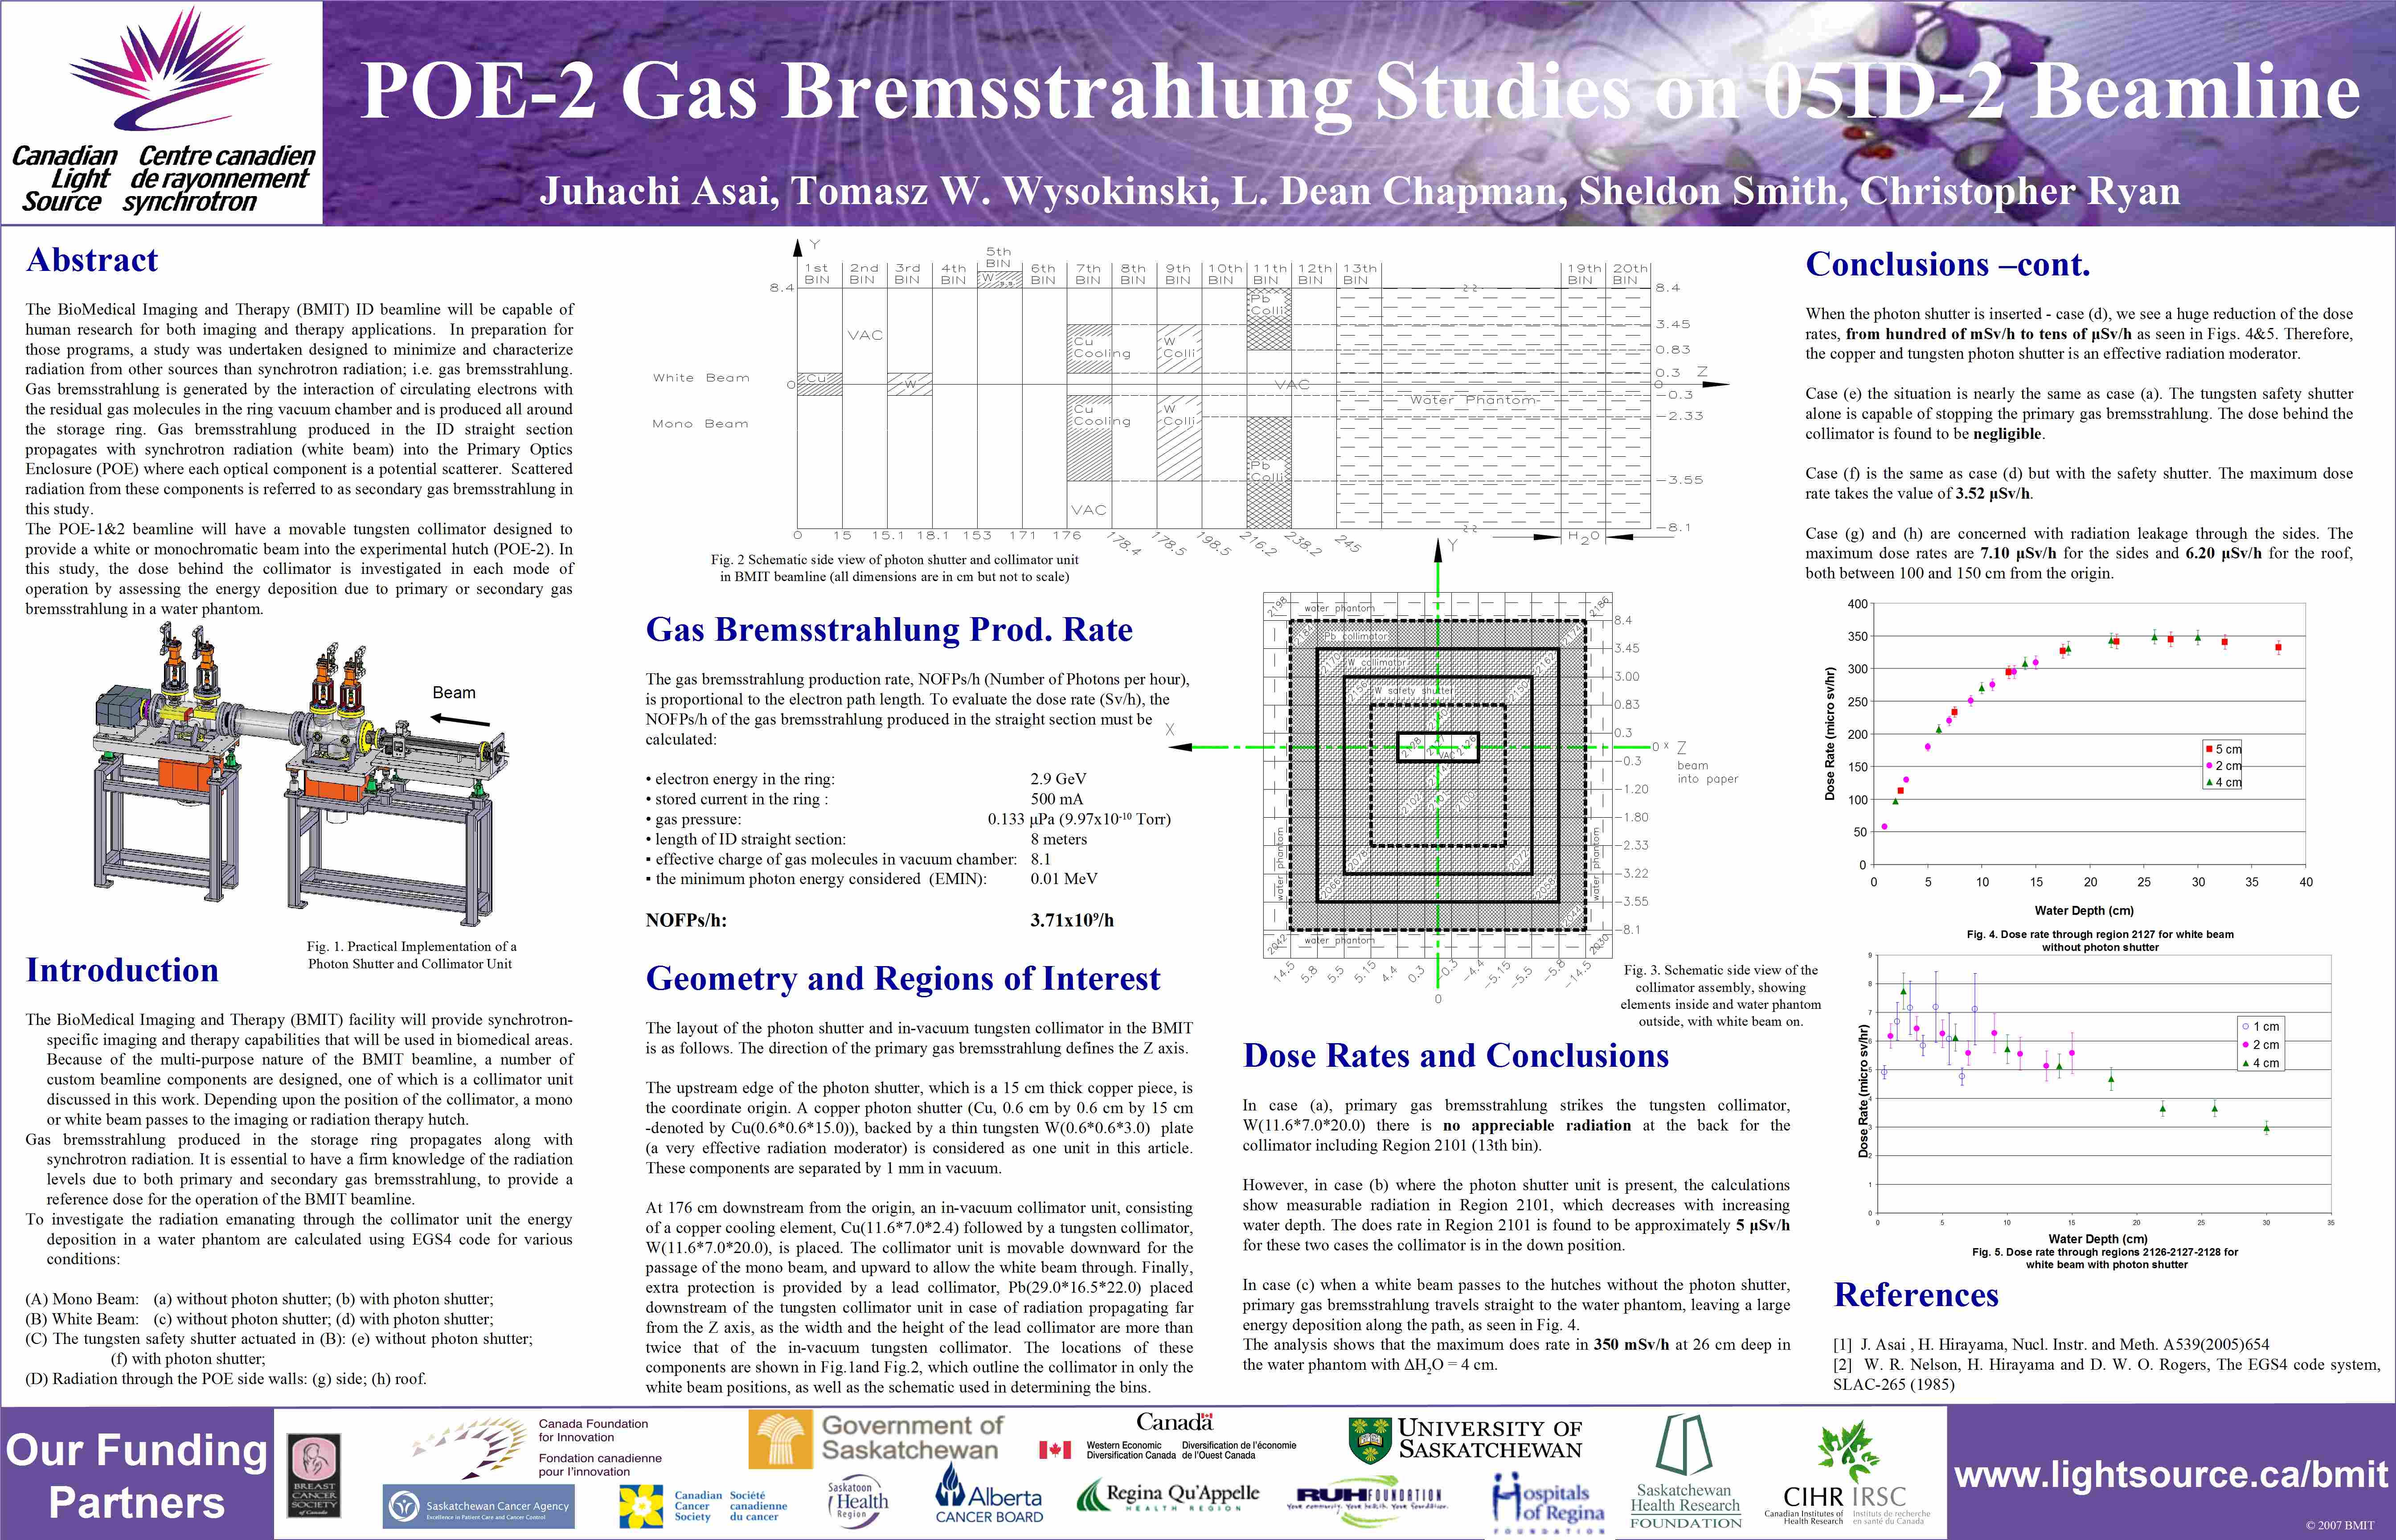 POE-2 Gas Bremsstrahlung Studies on 05ID-2 Beamline Image